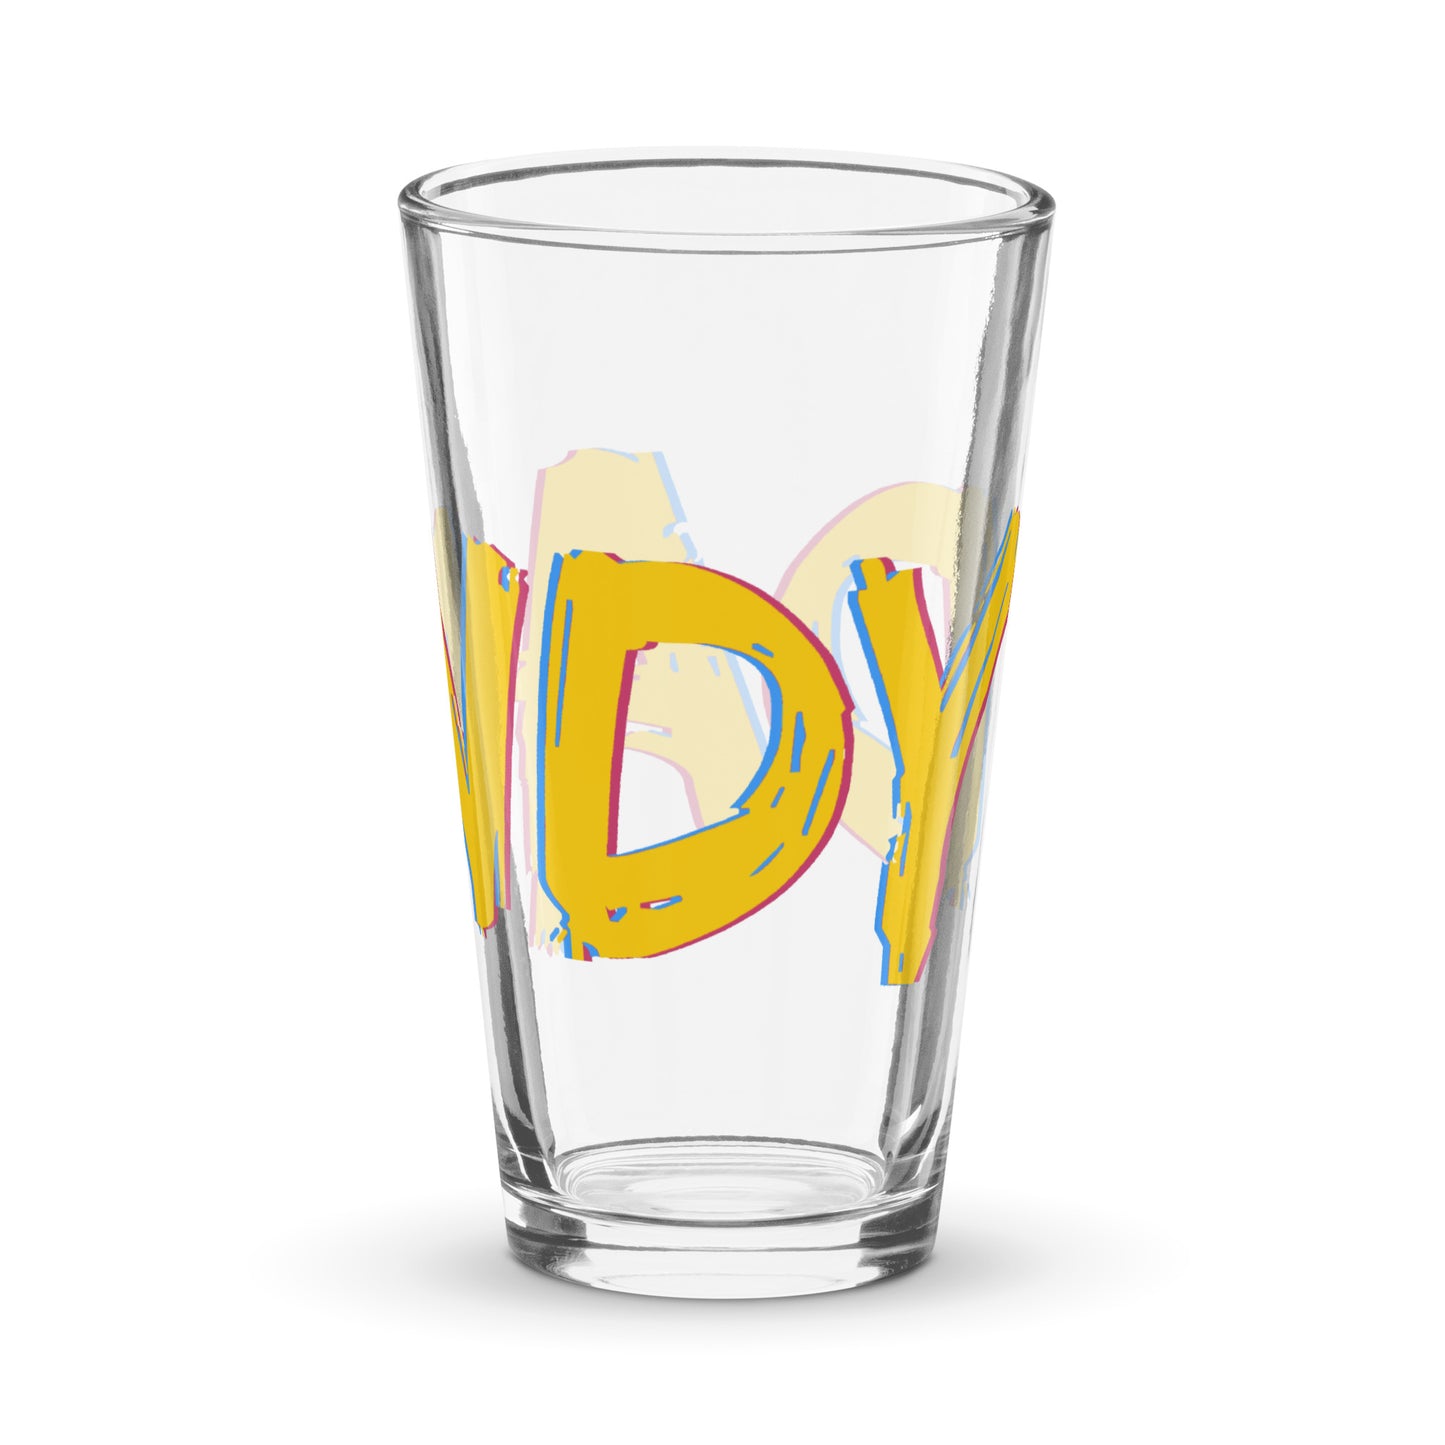 Dandy Shaker pint glass